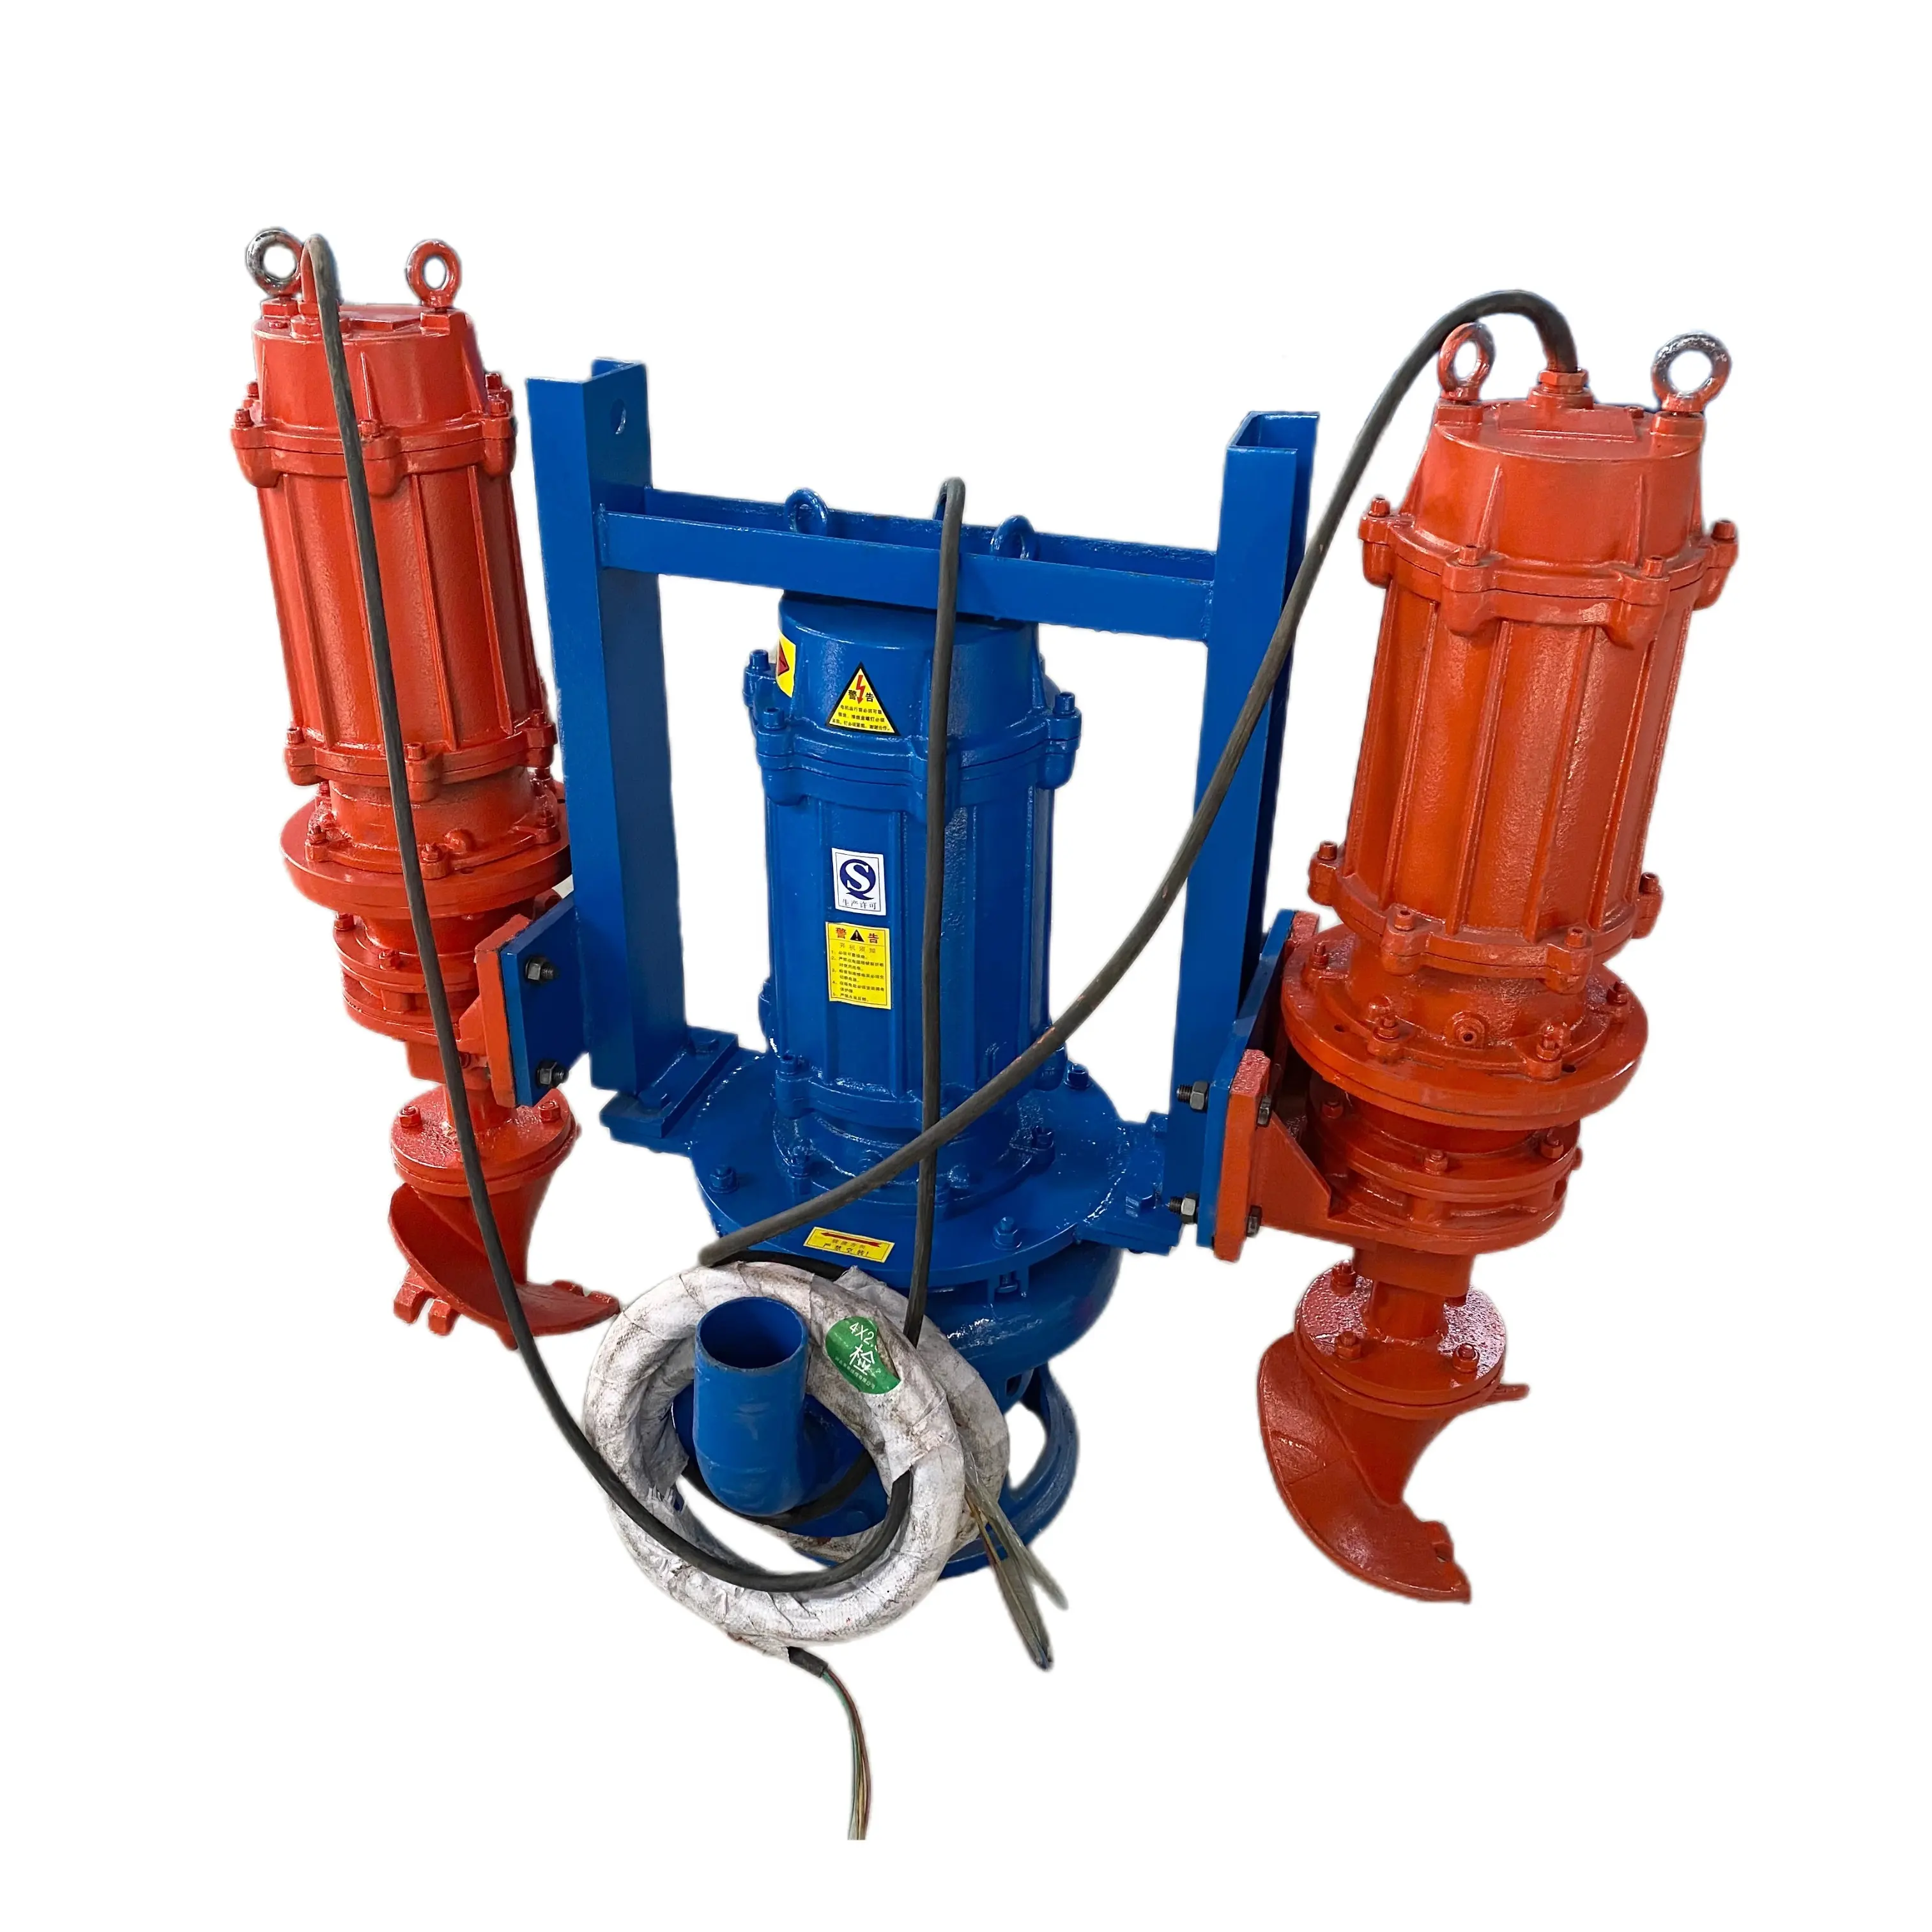 Vertical with agitator pump electric centrifugal river slurry pump submersible slurry pump